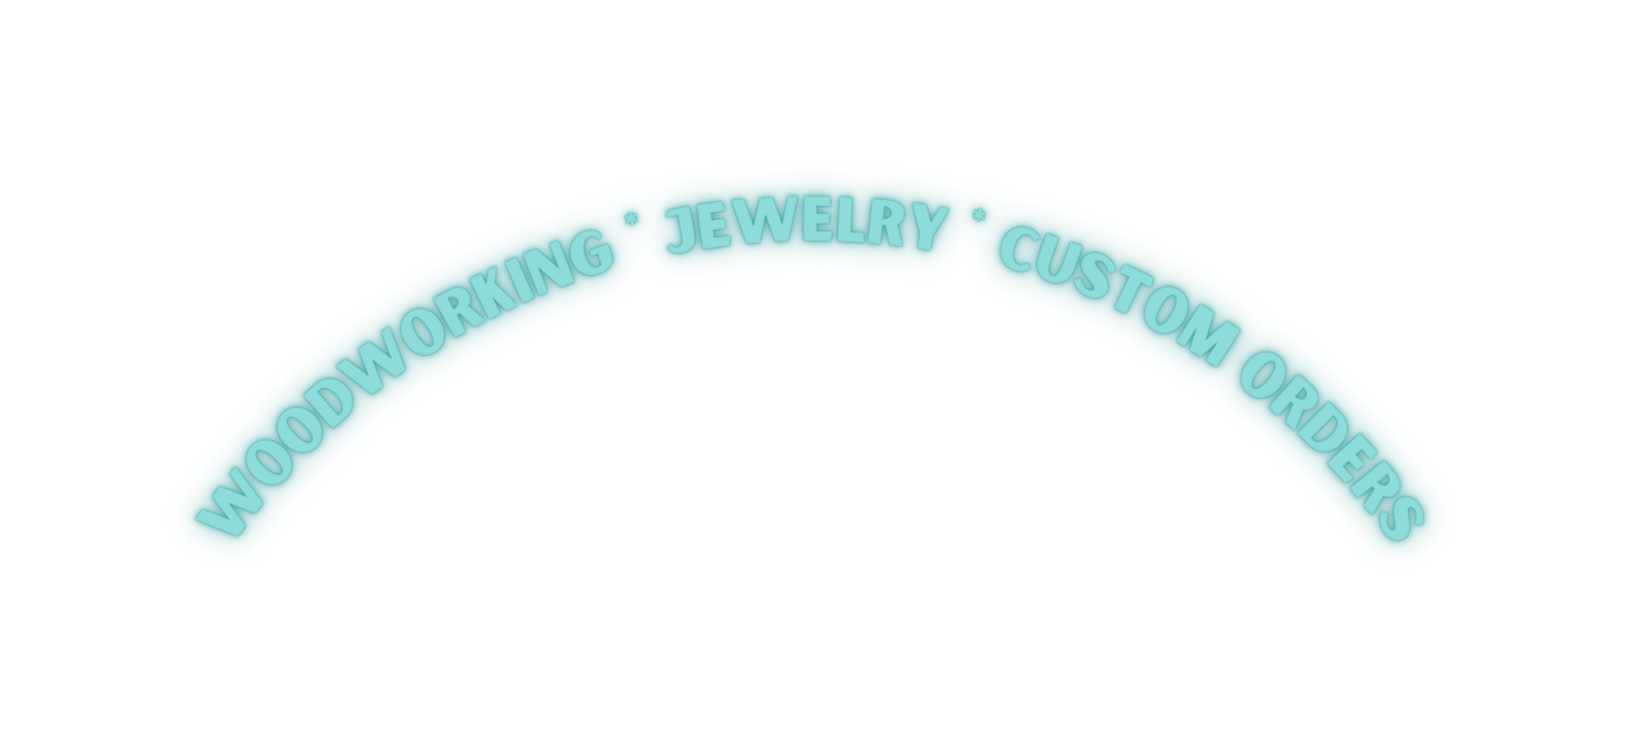 woodworking jewelry custom orders